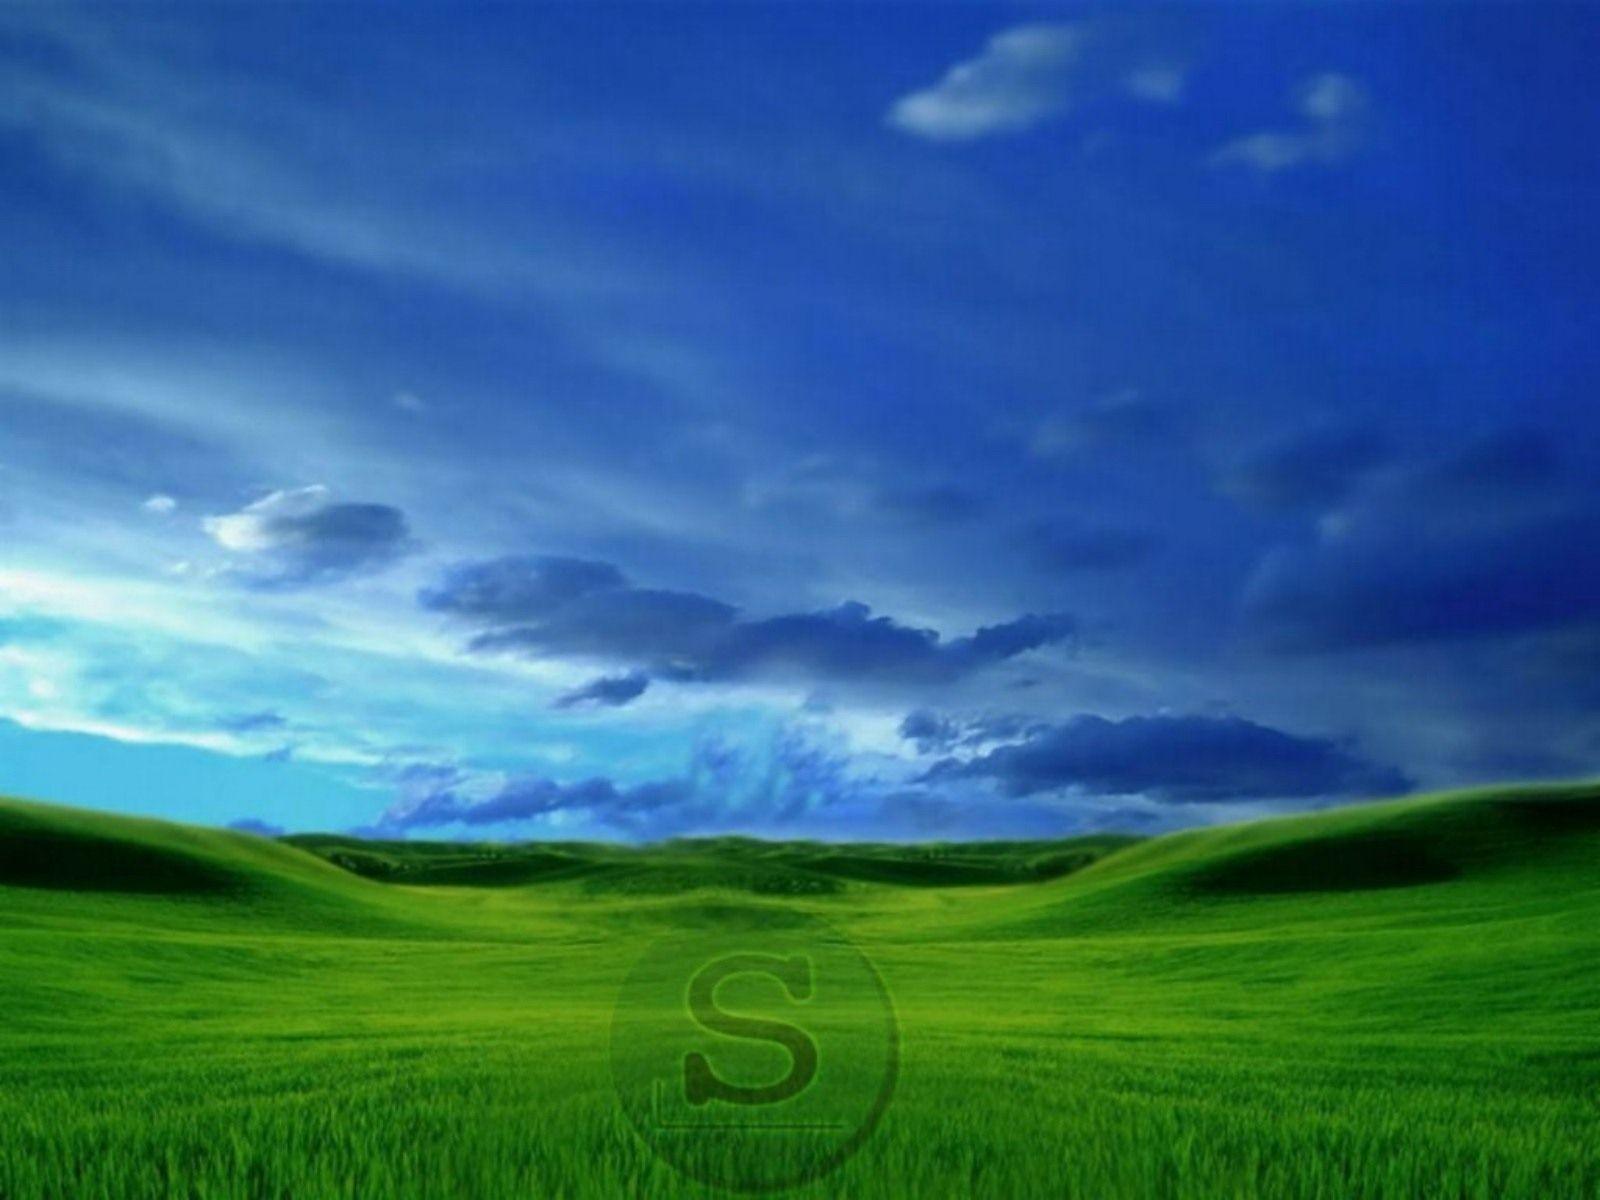 Slackware Xp Wallpaper Desktop Windows Xp Lile Slack Background